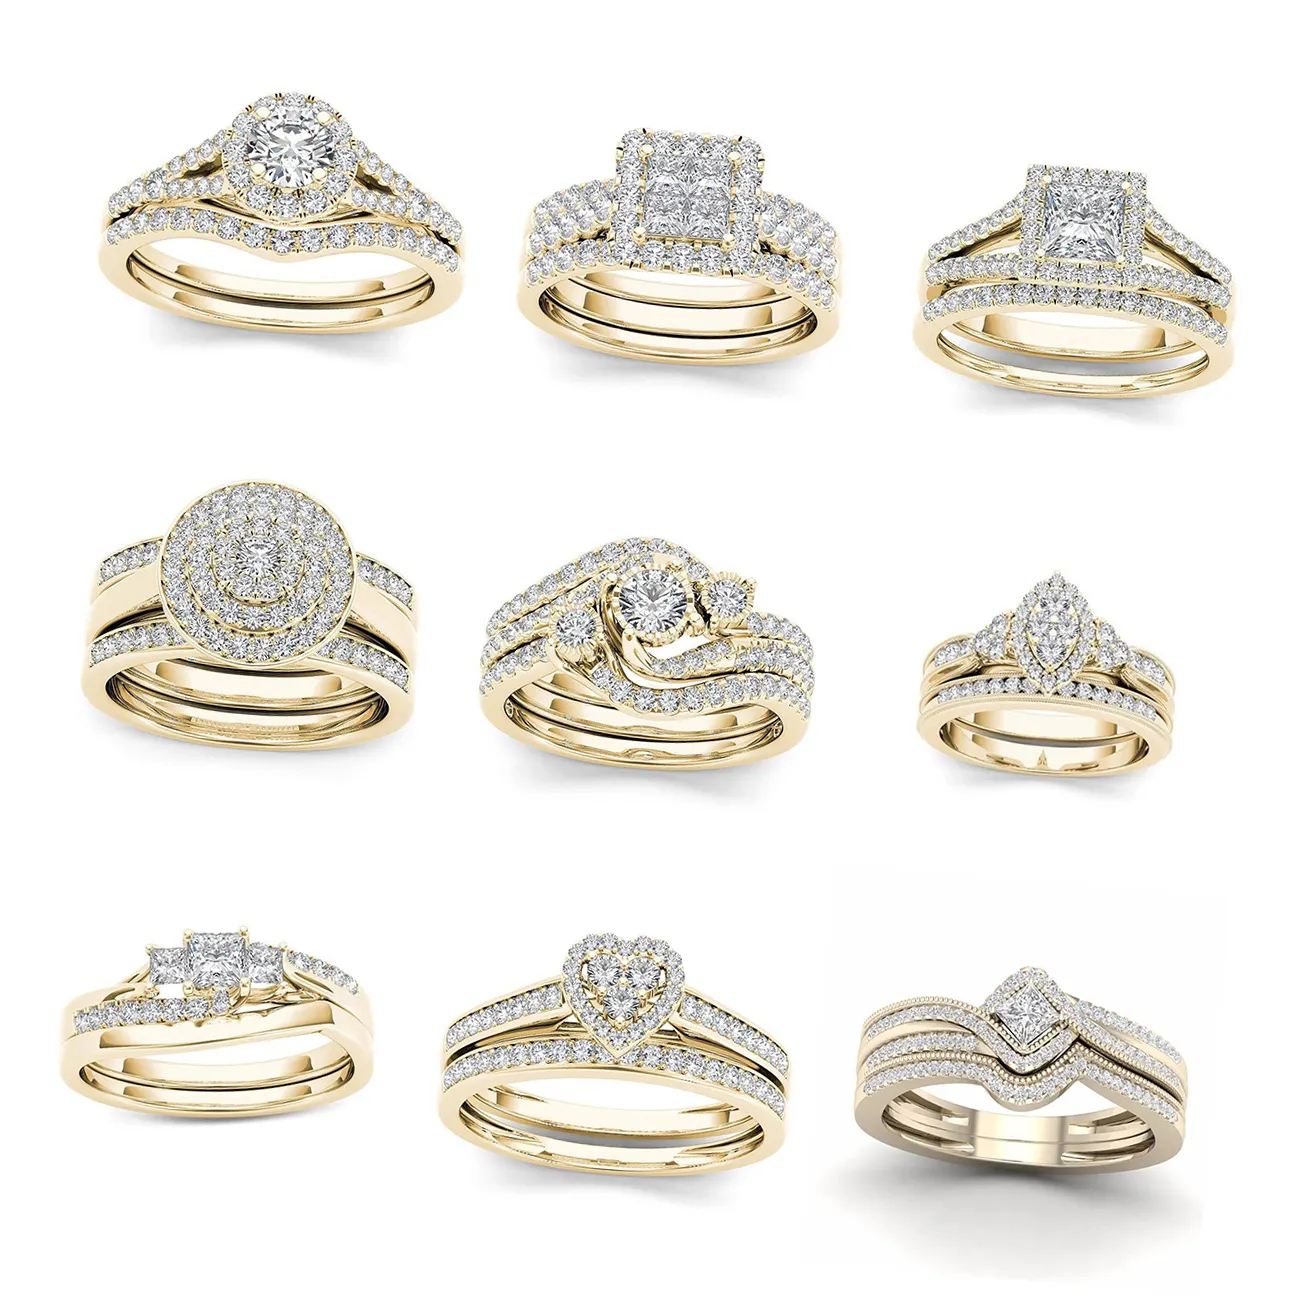 Fashion shiny jewelry full zircon diamond couple rings 18K gold plated cubic zirconia stackable eternity wedding band ring set